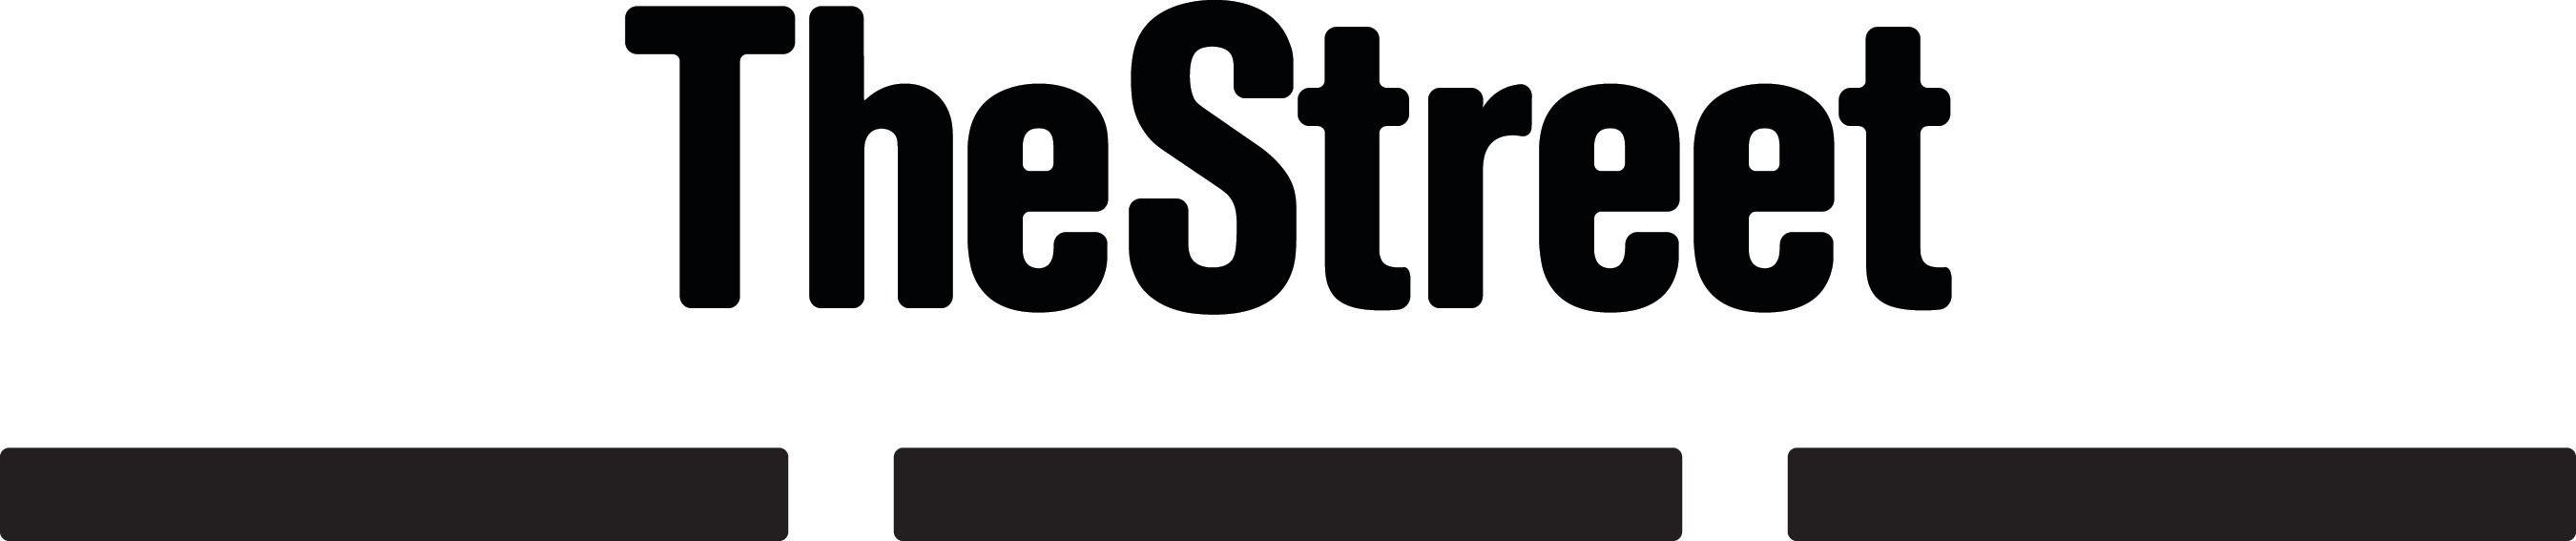 TheStreet Logo - TheStreet, Inc. Reports Inducement Grant under NASDAQ Listing Rule